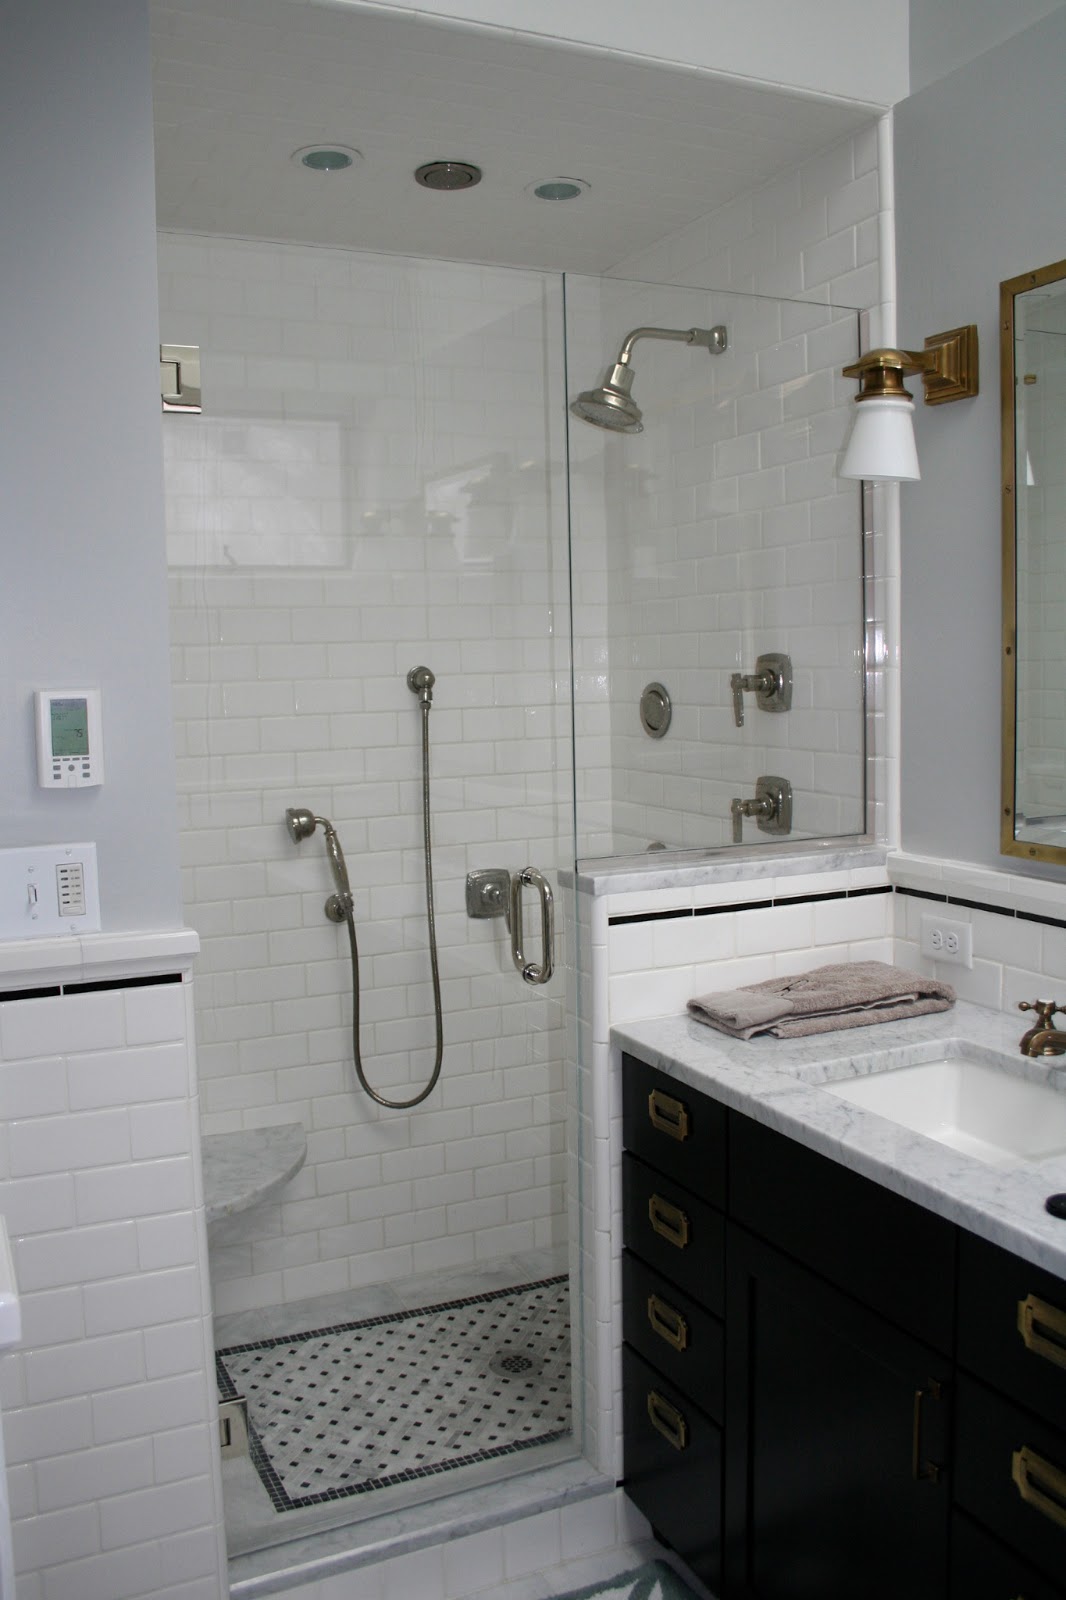 floor-design-amazing-white-bathroom-design-ideas-with-white-marble-basketweave-tile-bathroom-floor-including-white-tile-bathroom-wall-and-steel-dual-shower-beautiful-white-marble-basketweave-tile-for